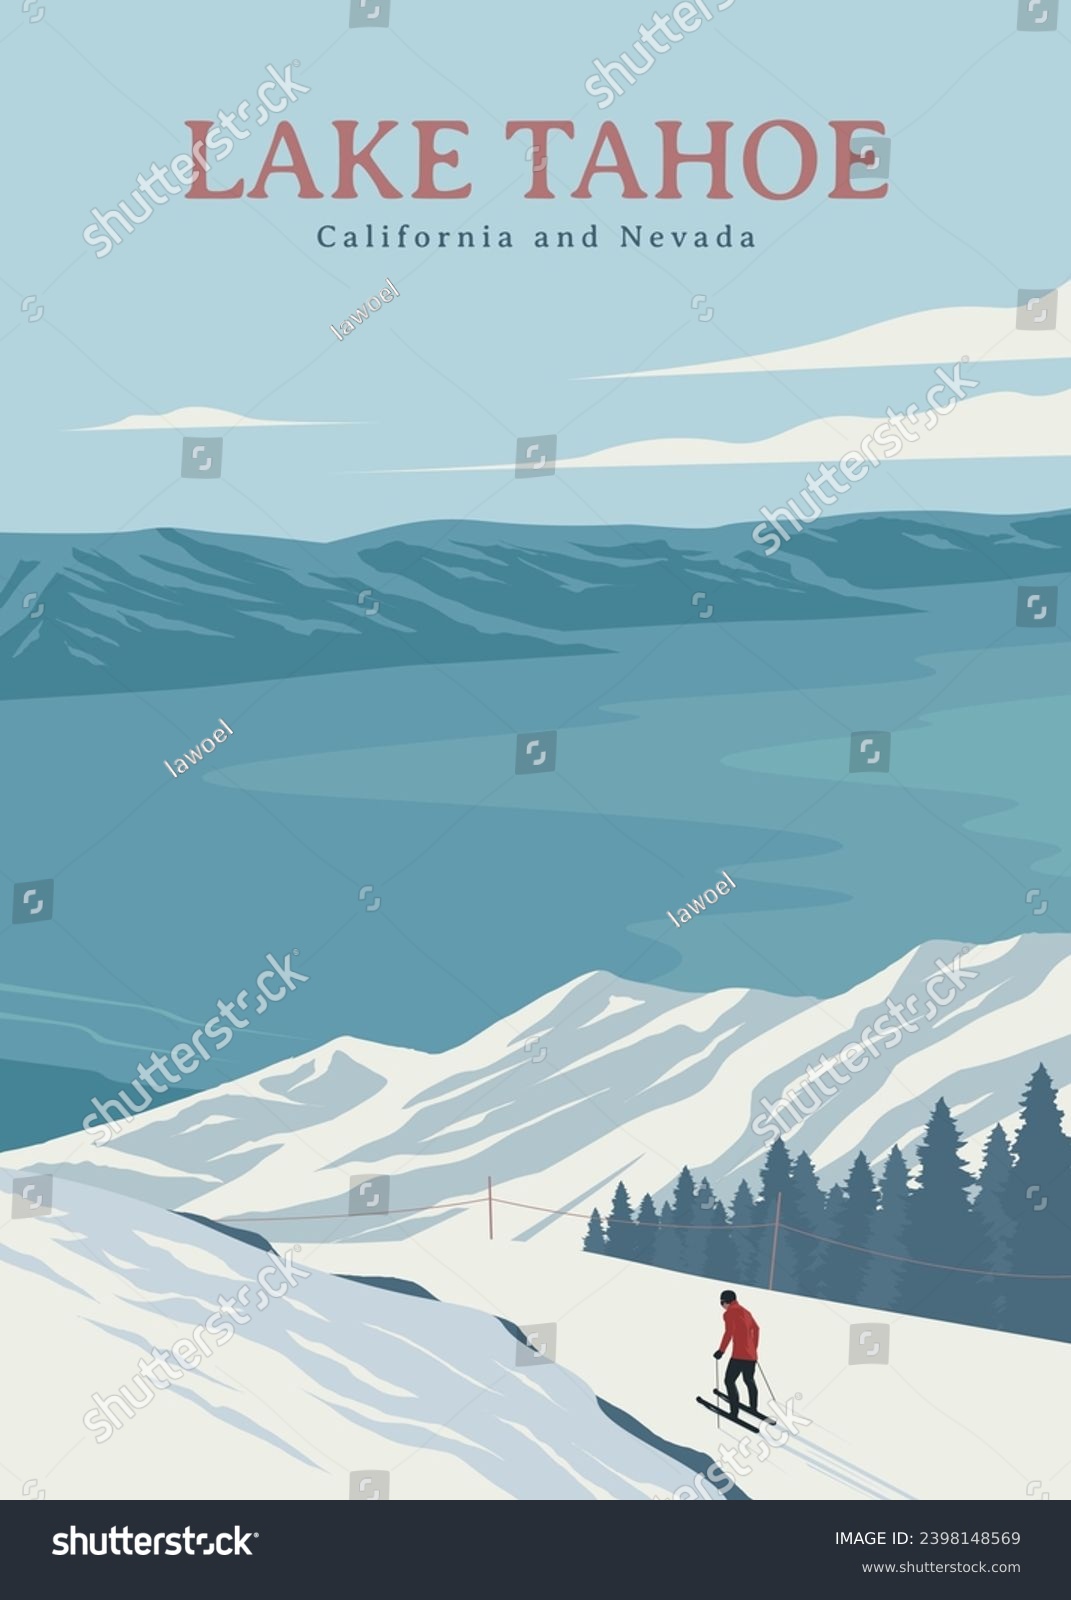 SVG of lake tahoe ski resort travel poster vintage design, lake tahoe winter view nevada and california svg